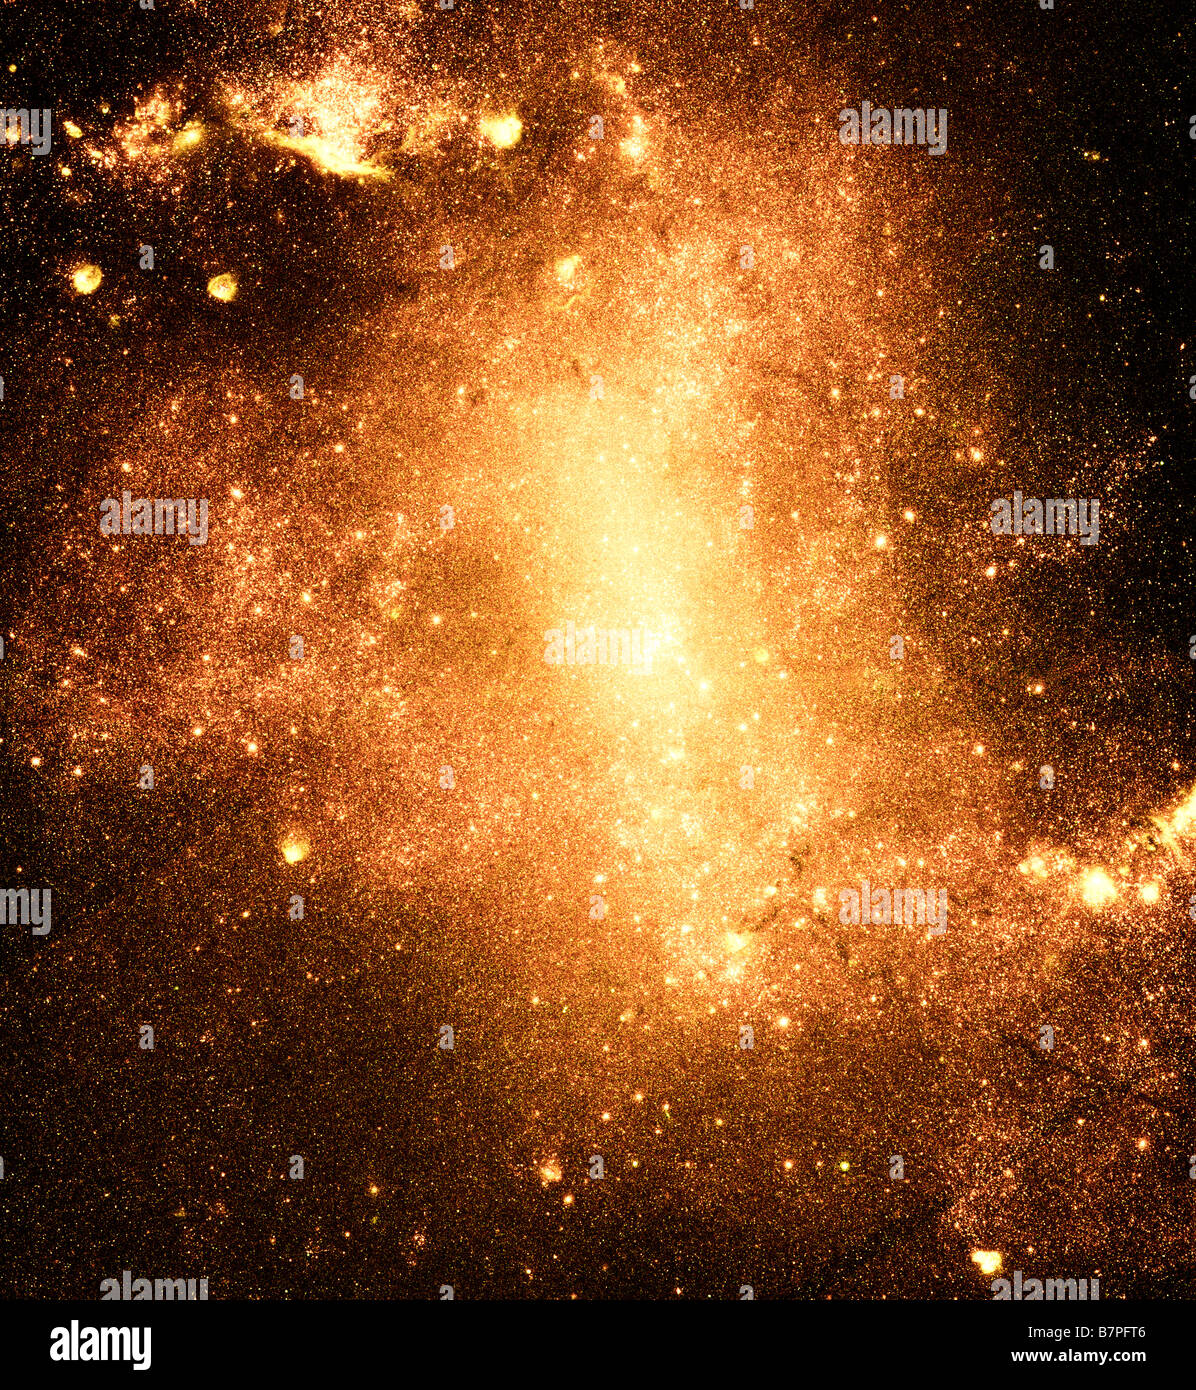 NASA ESA photograph of huge star galaxy taken with Hubble Telescope Stock Photo